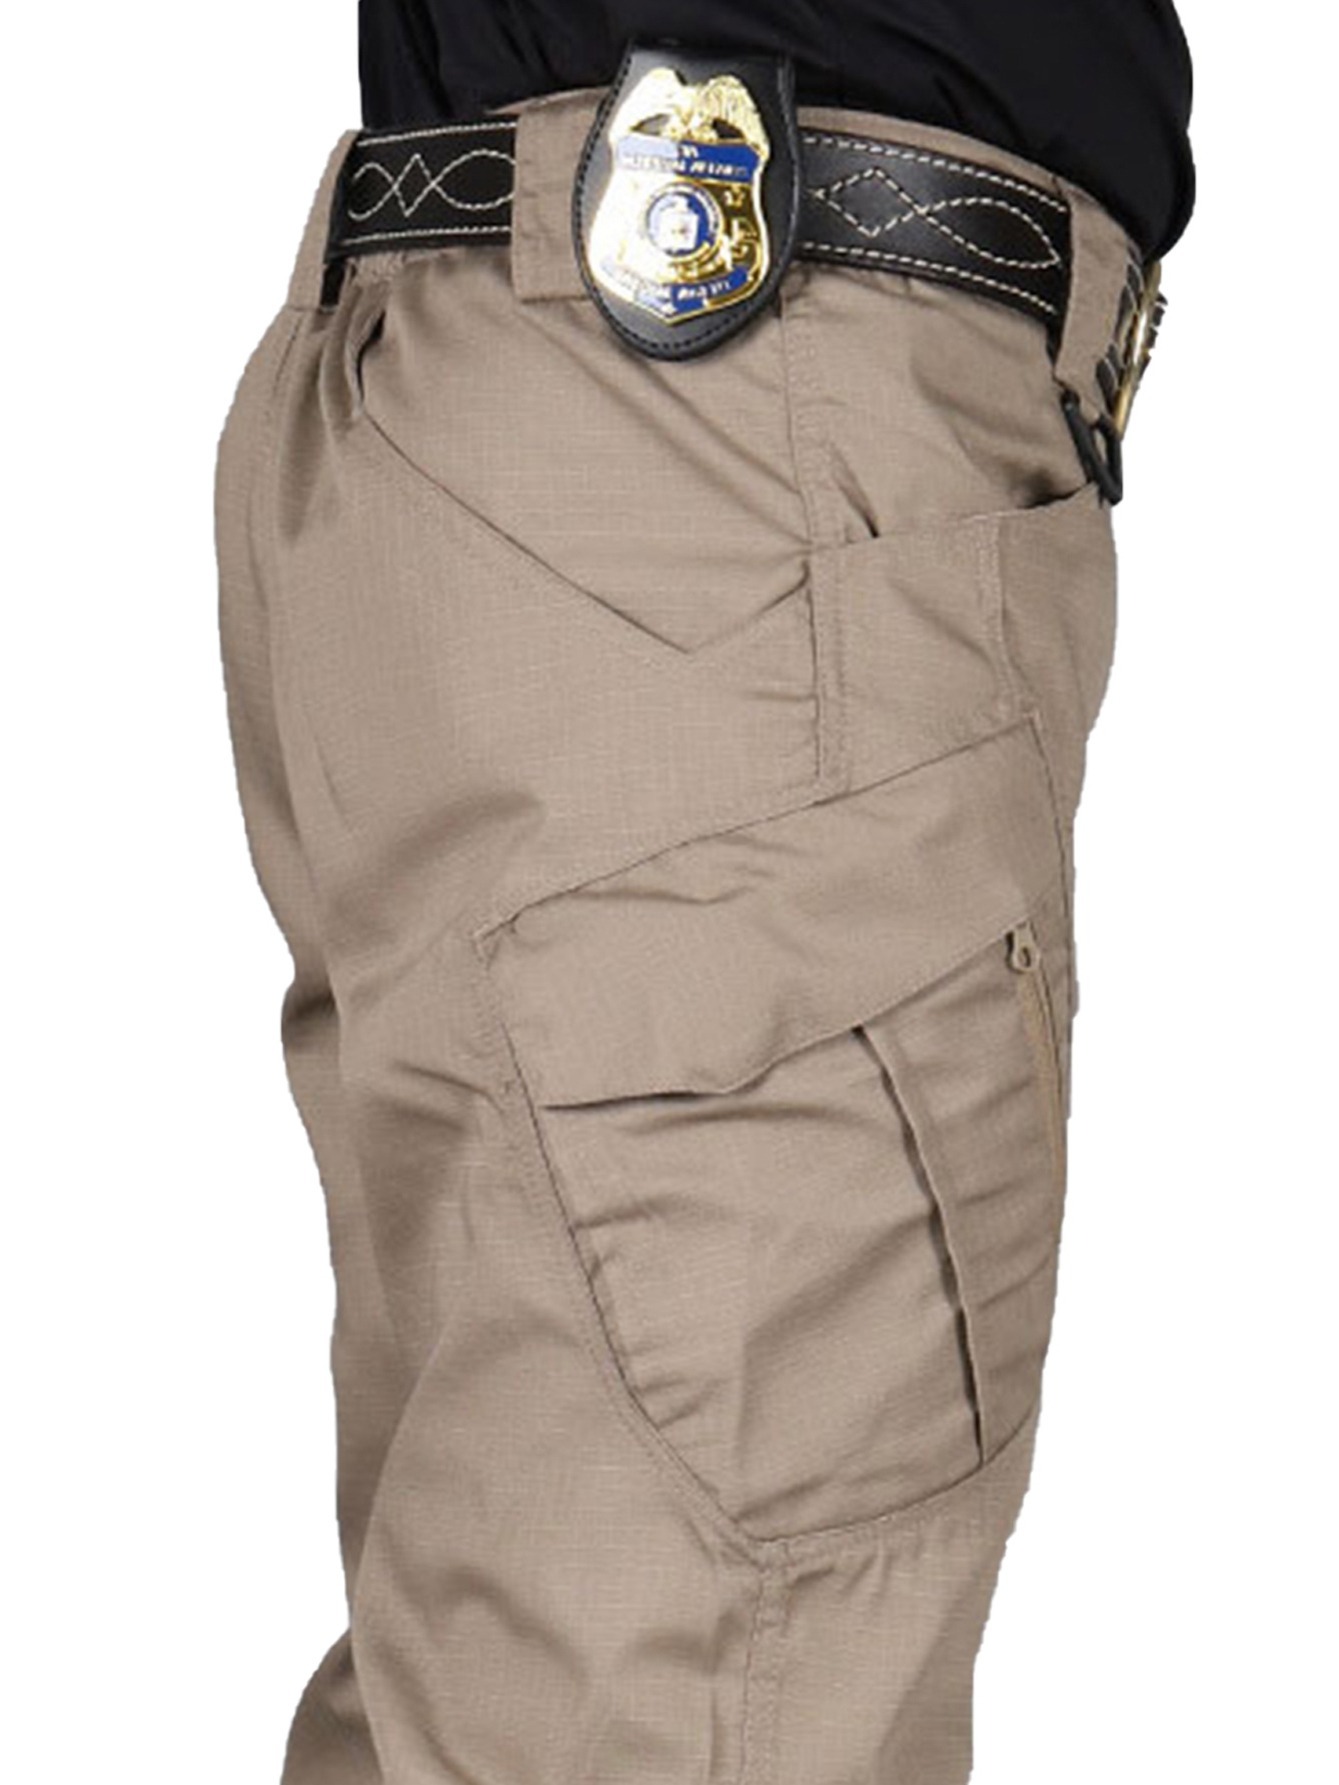 RTRDE Men's Cargo Work Pants Tactical Pants Water Resistant Ripstop Pants  Lightweight Work Hiking Outdoor Pants, M-3XL